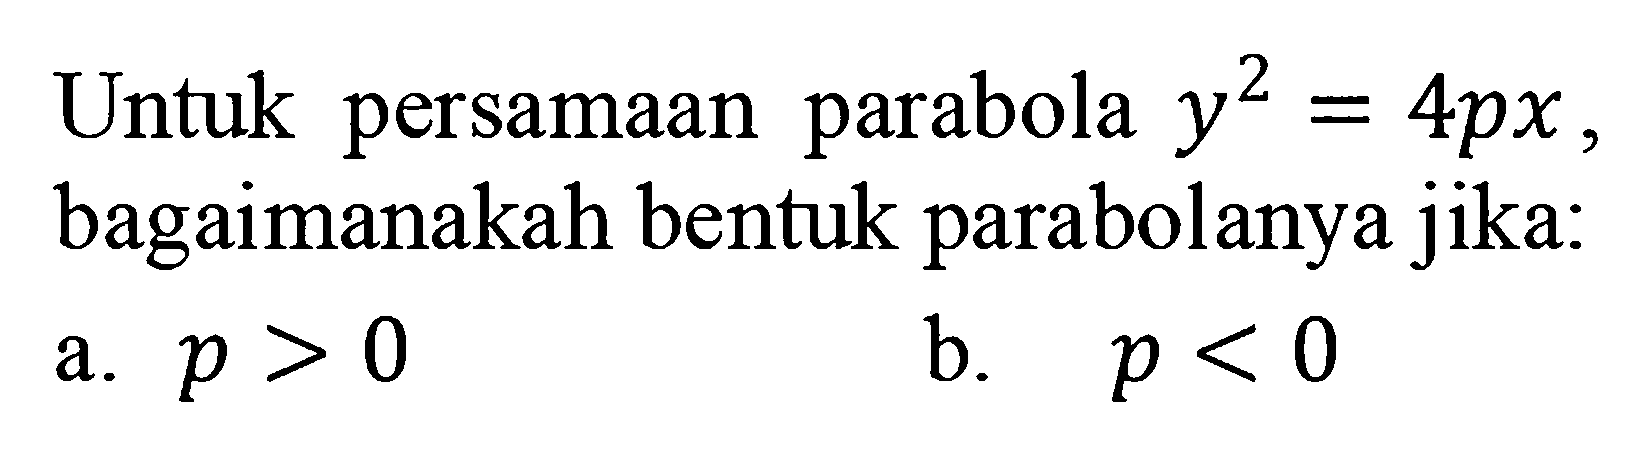 Untuk persamaan parabola y^2 = 4px, bagaimanakah bentuk parabolanya jika:
a. p > 0
b. p < 0